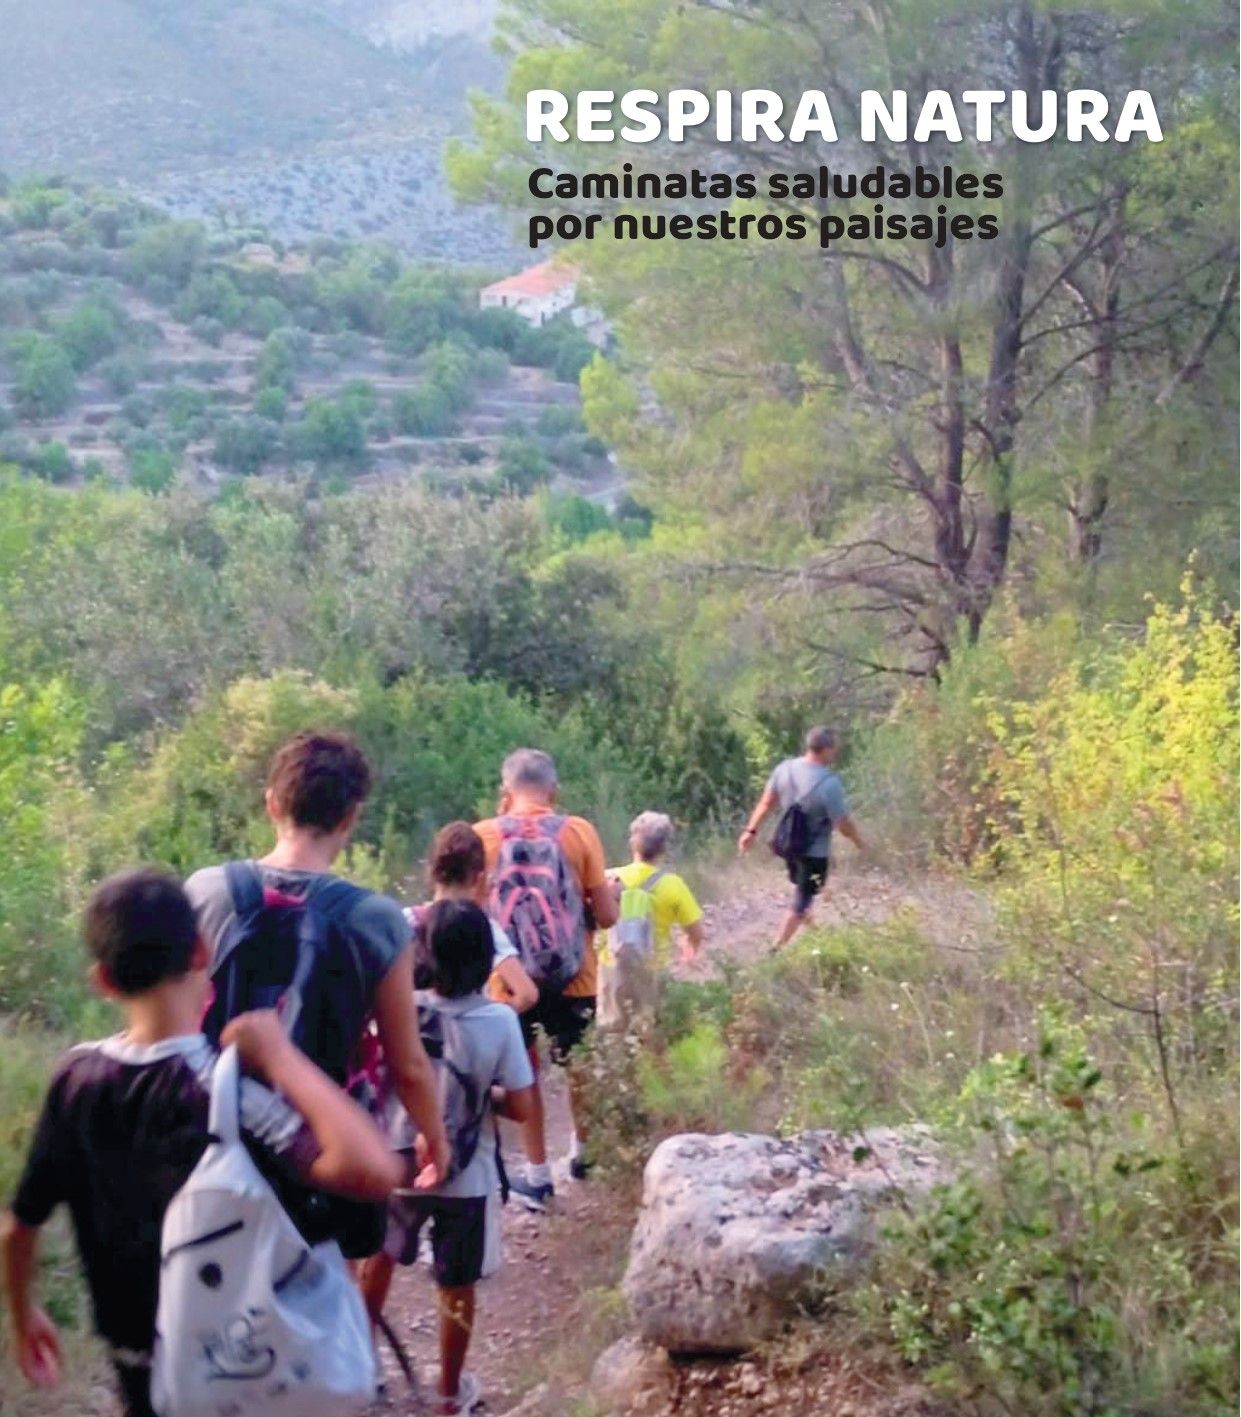 Regresa “Respira natura”, el programa de rutas saludables para conocer Dénia